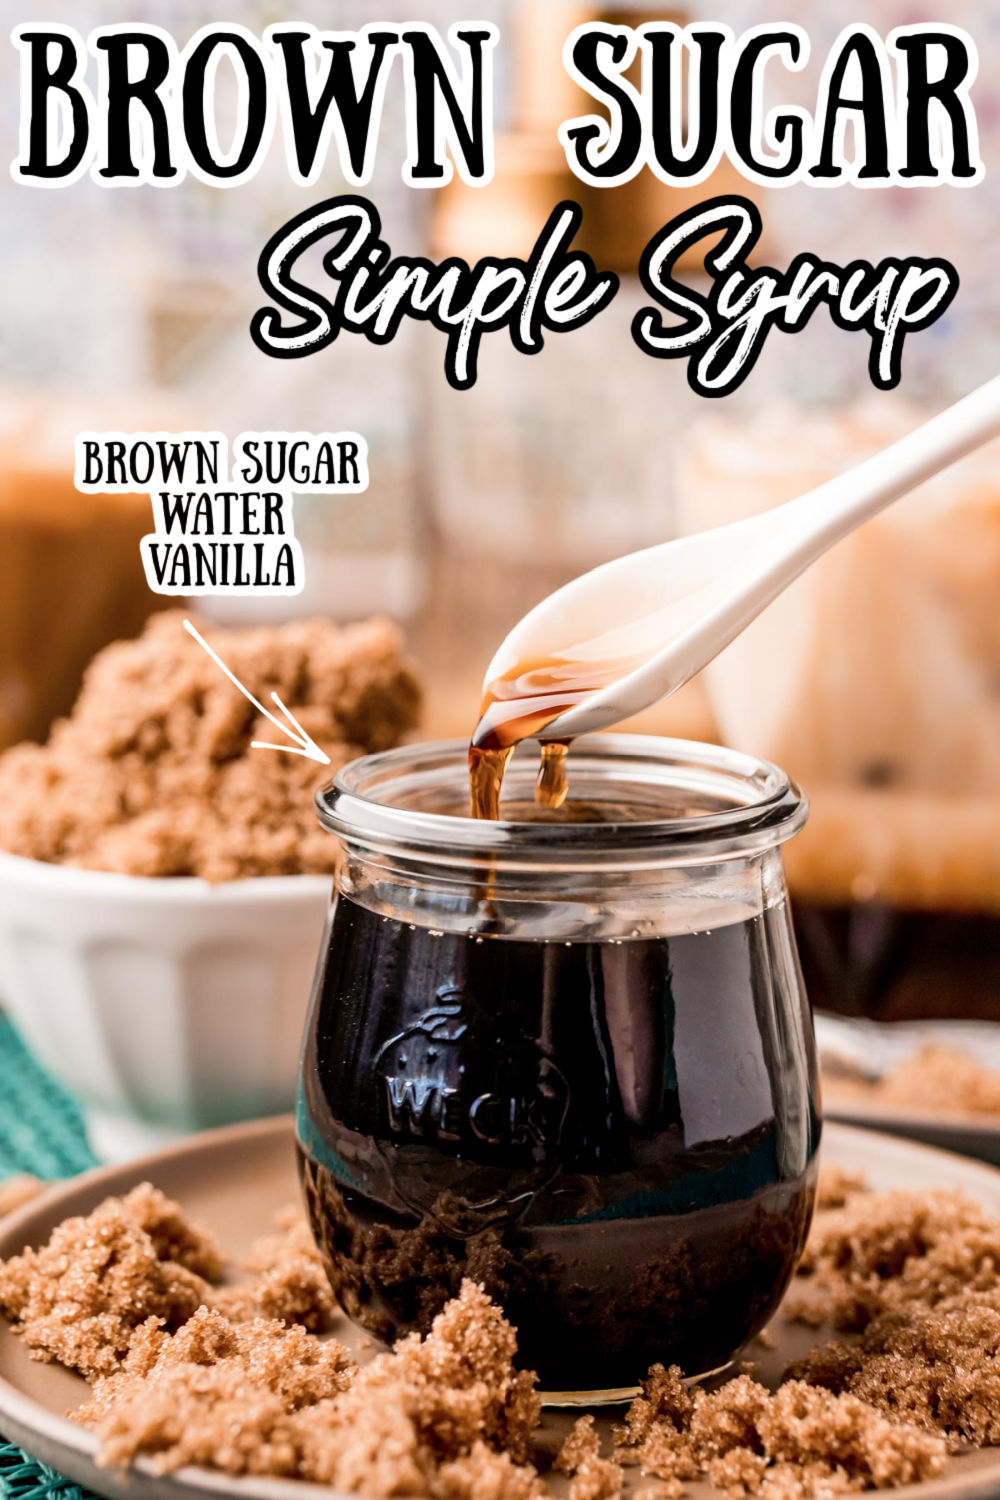 https://www.sugarandsoul.co/wp-content/uploads/2021/03/brown-sugar-simple-syrup.jpg